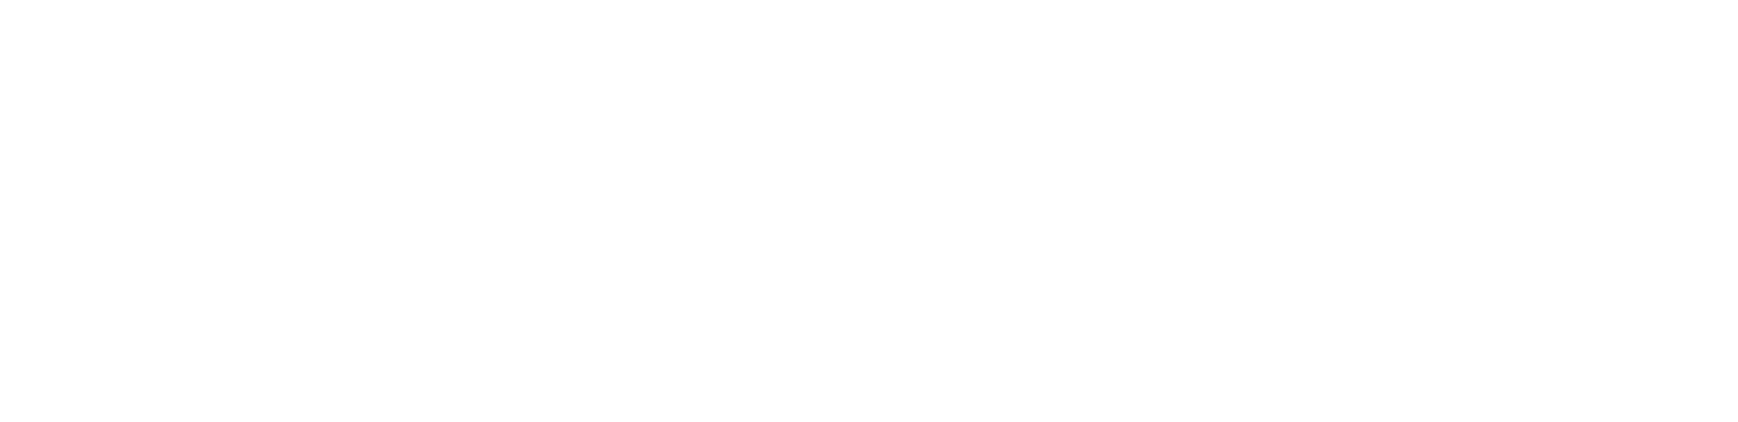 Pulseroller - Home page